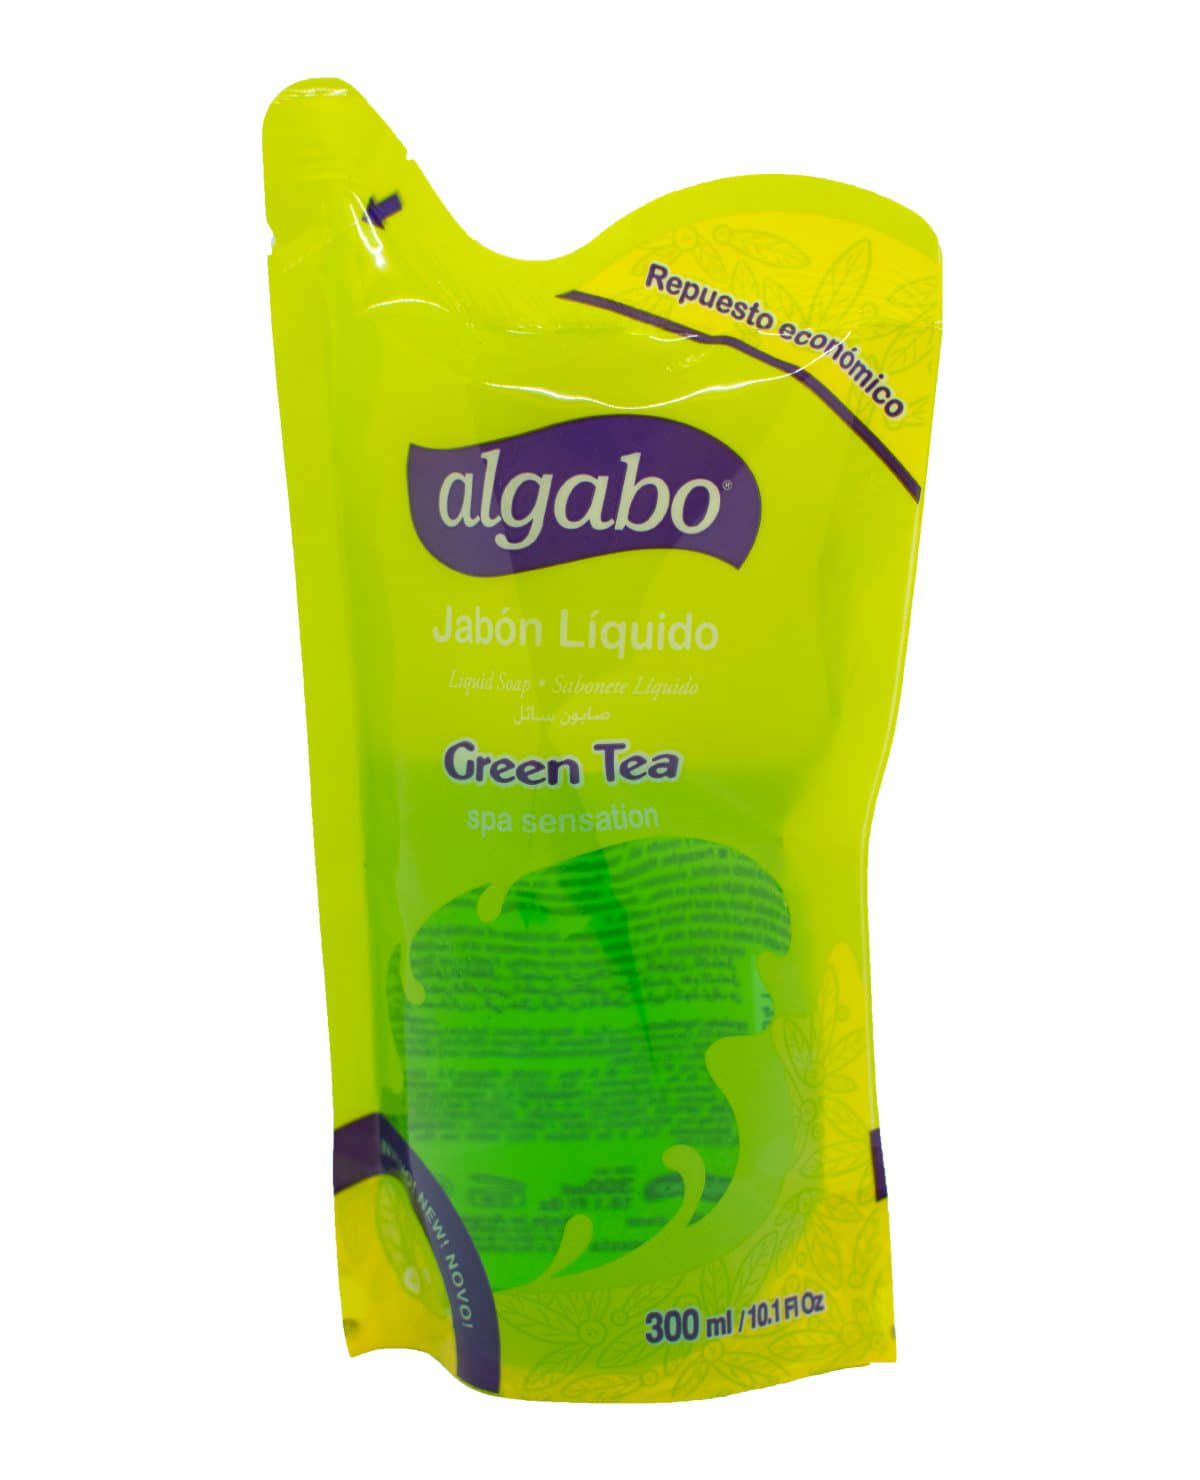 Jabon Liquido Algabo Green tea Repuesto Económico300 Ml